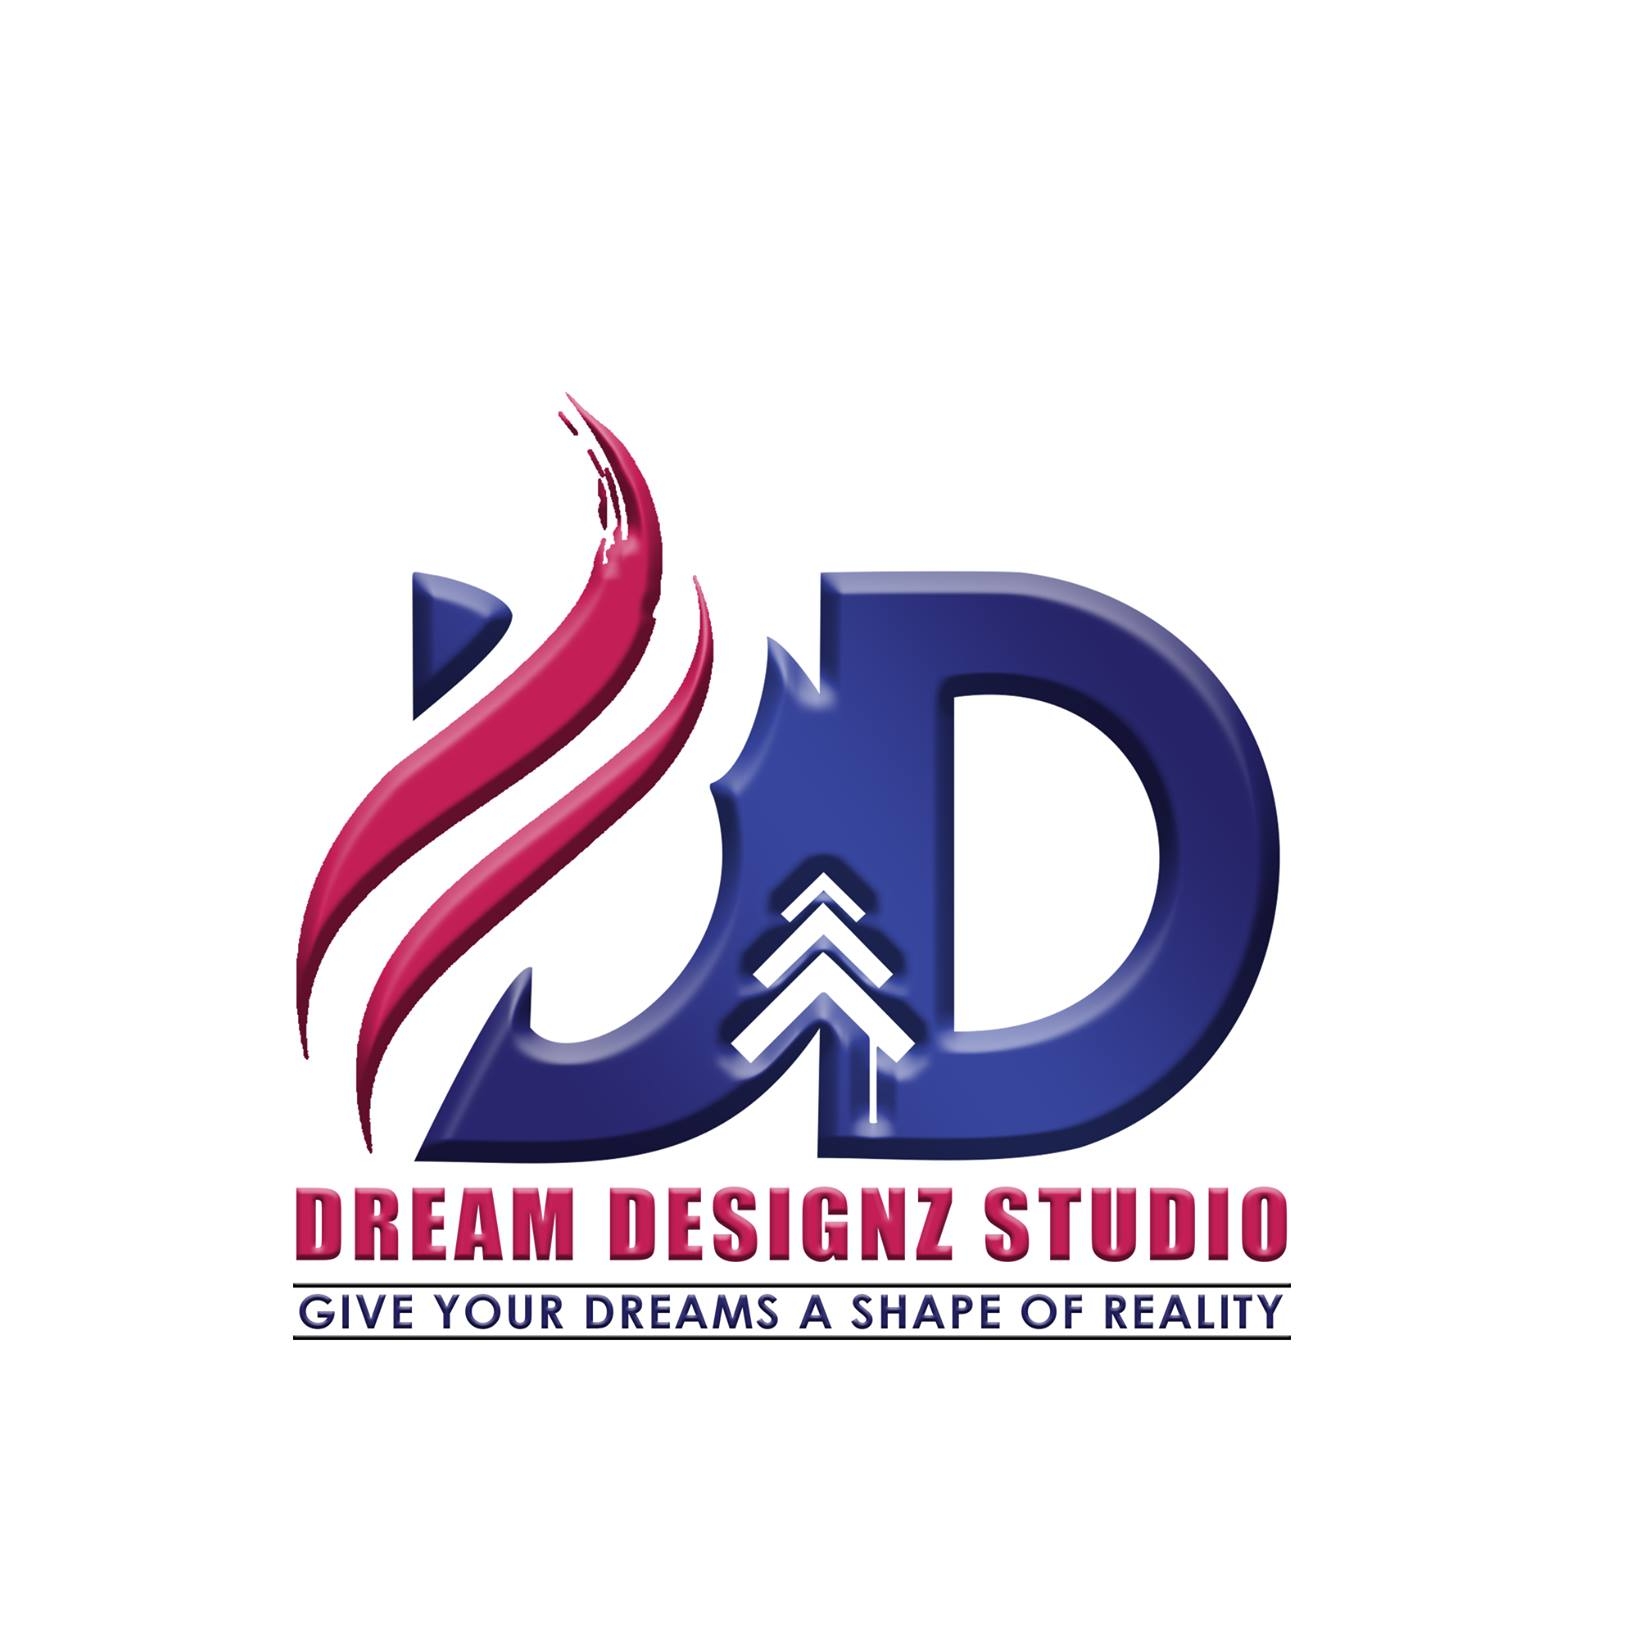 DREAM DESIGNZ STUDIO|Legal Services|Professional Services